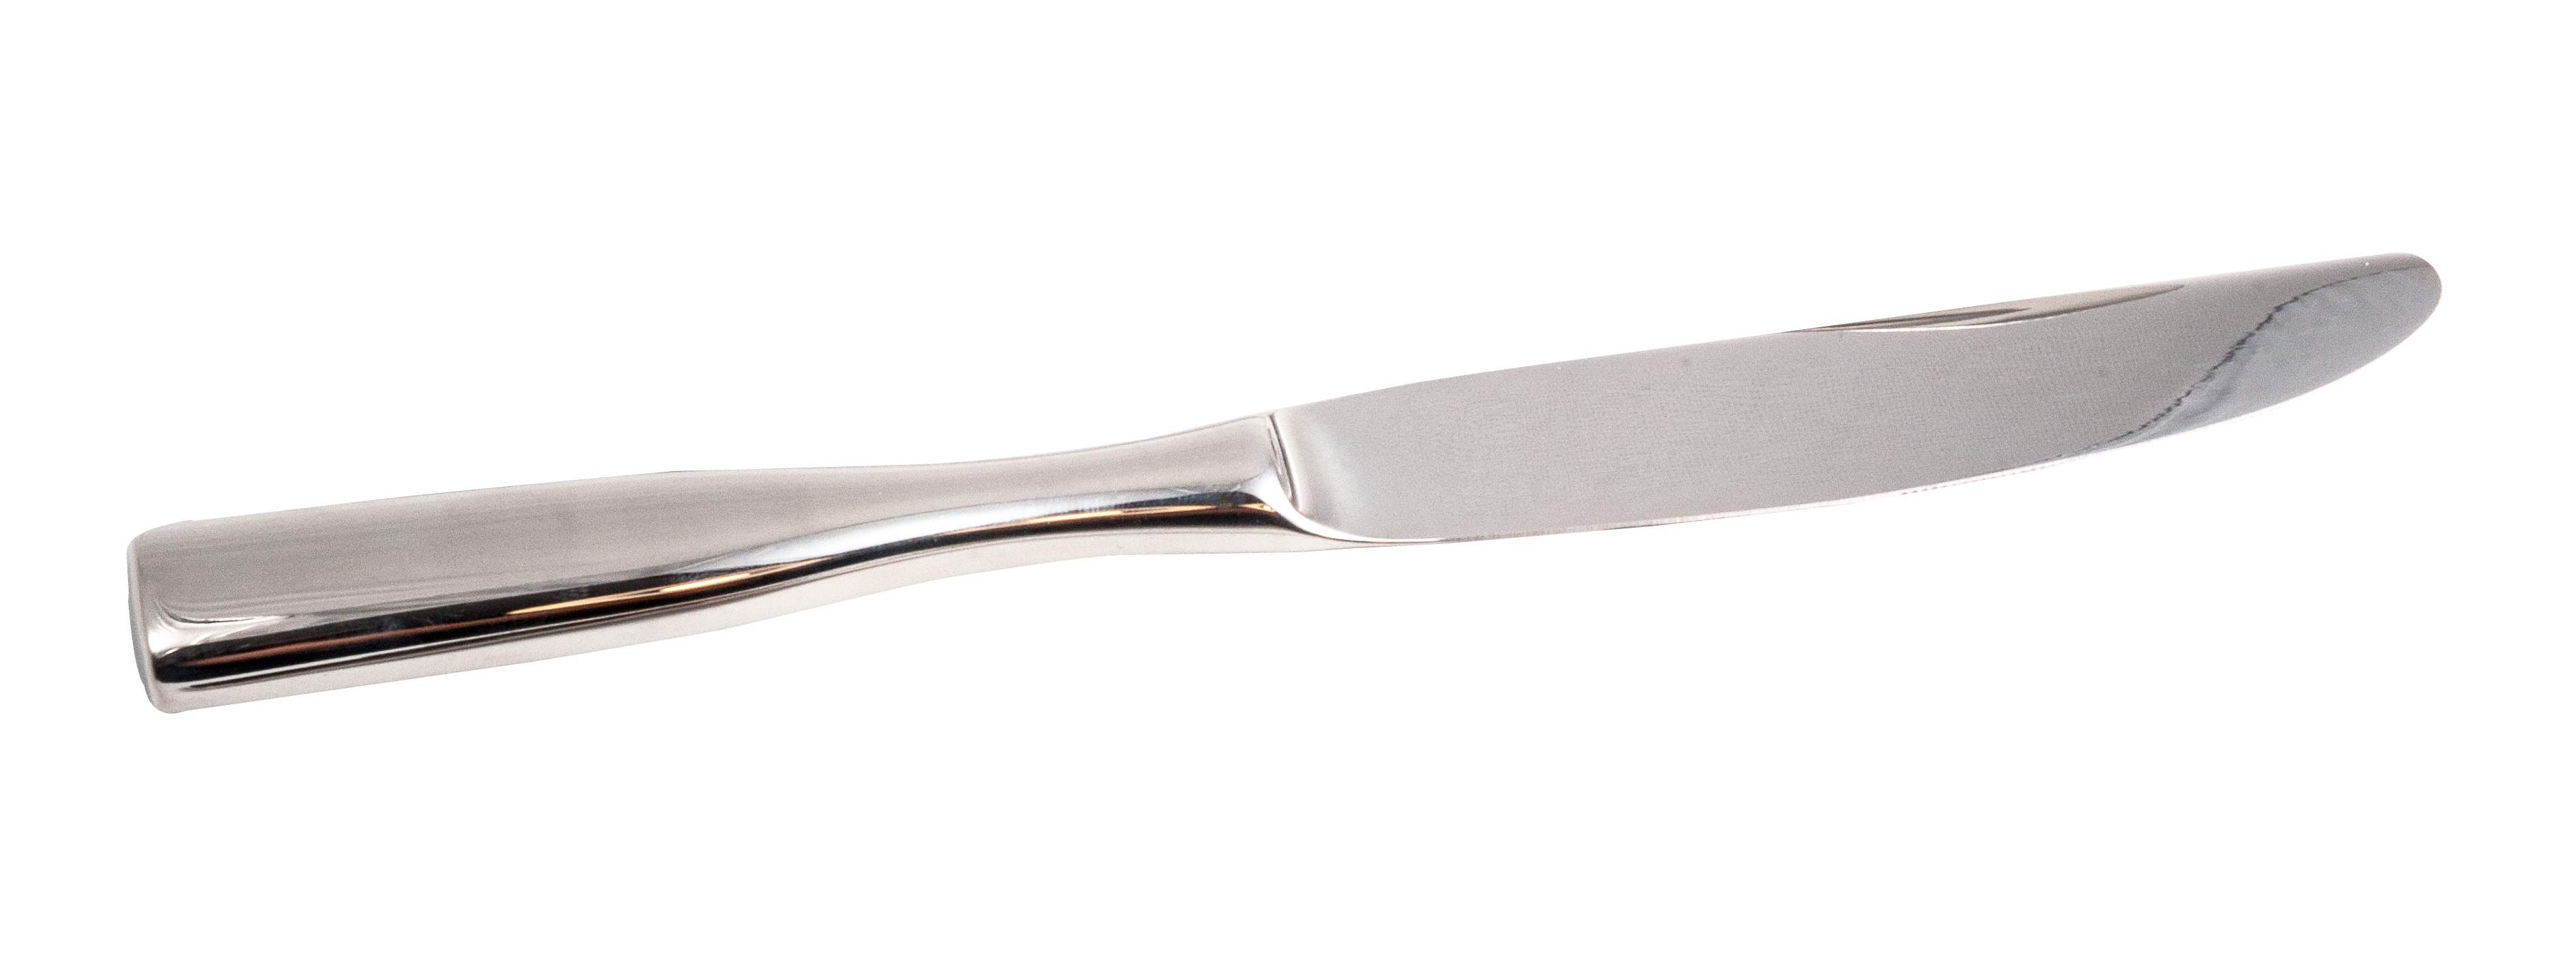 Metal Kitchen Knife PNG Image